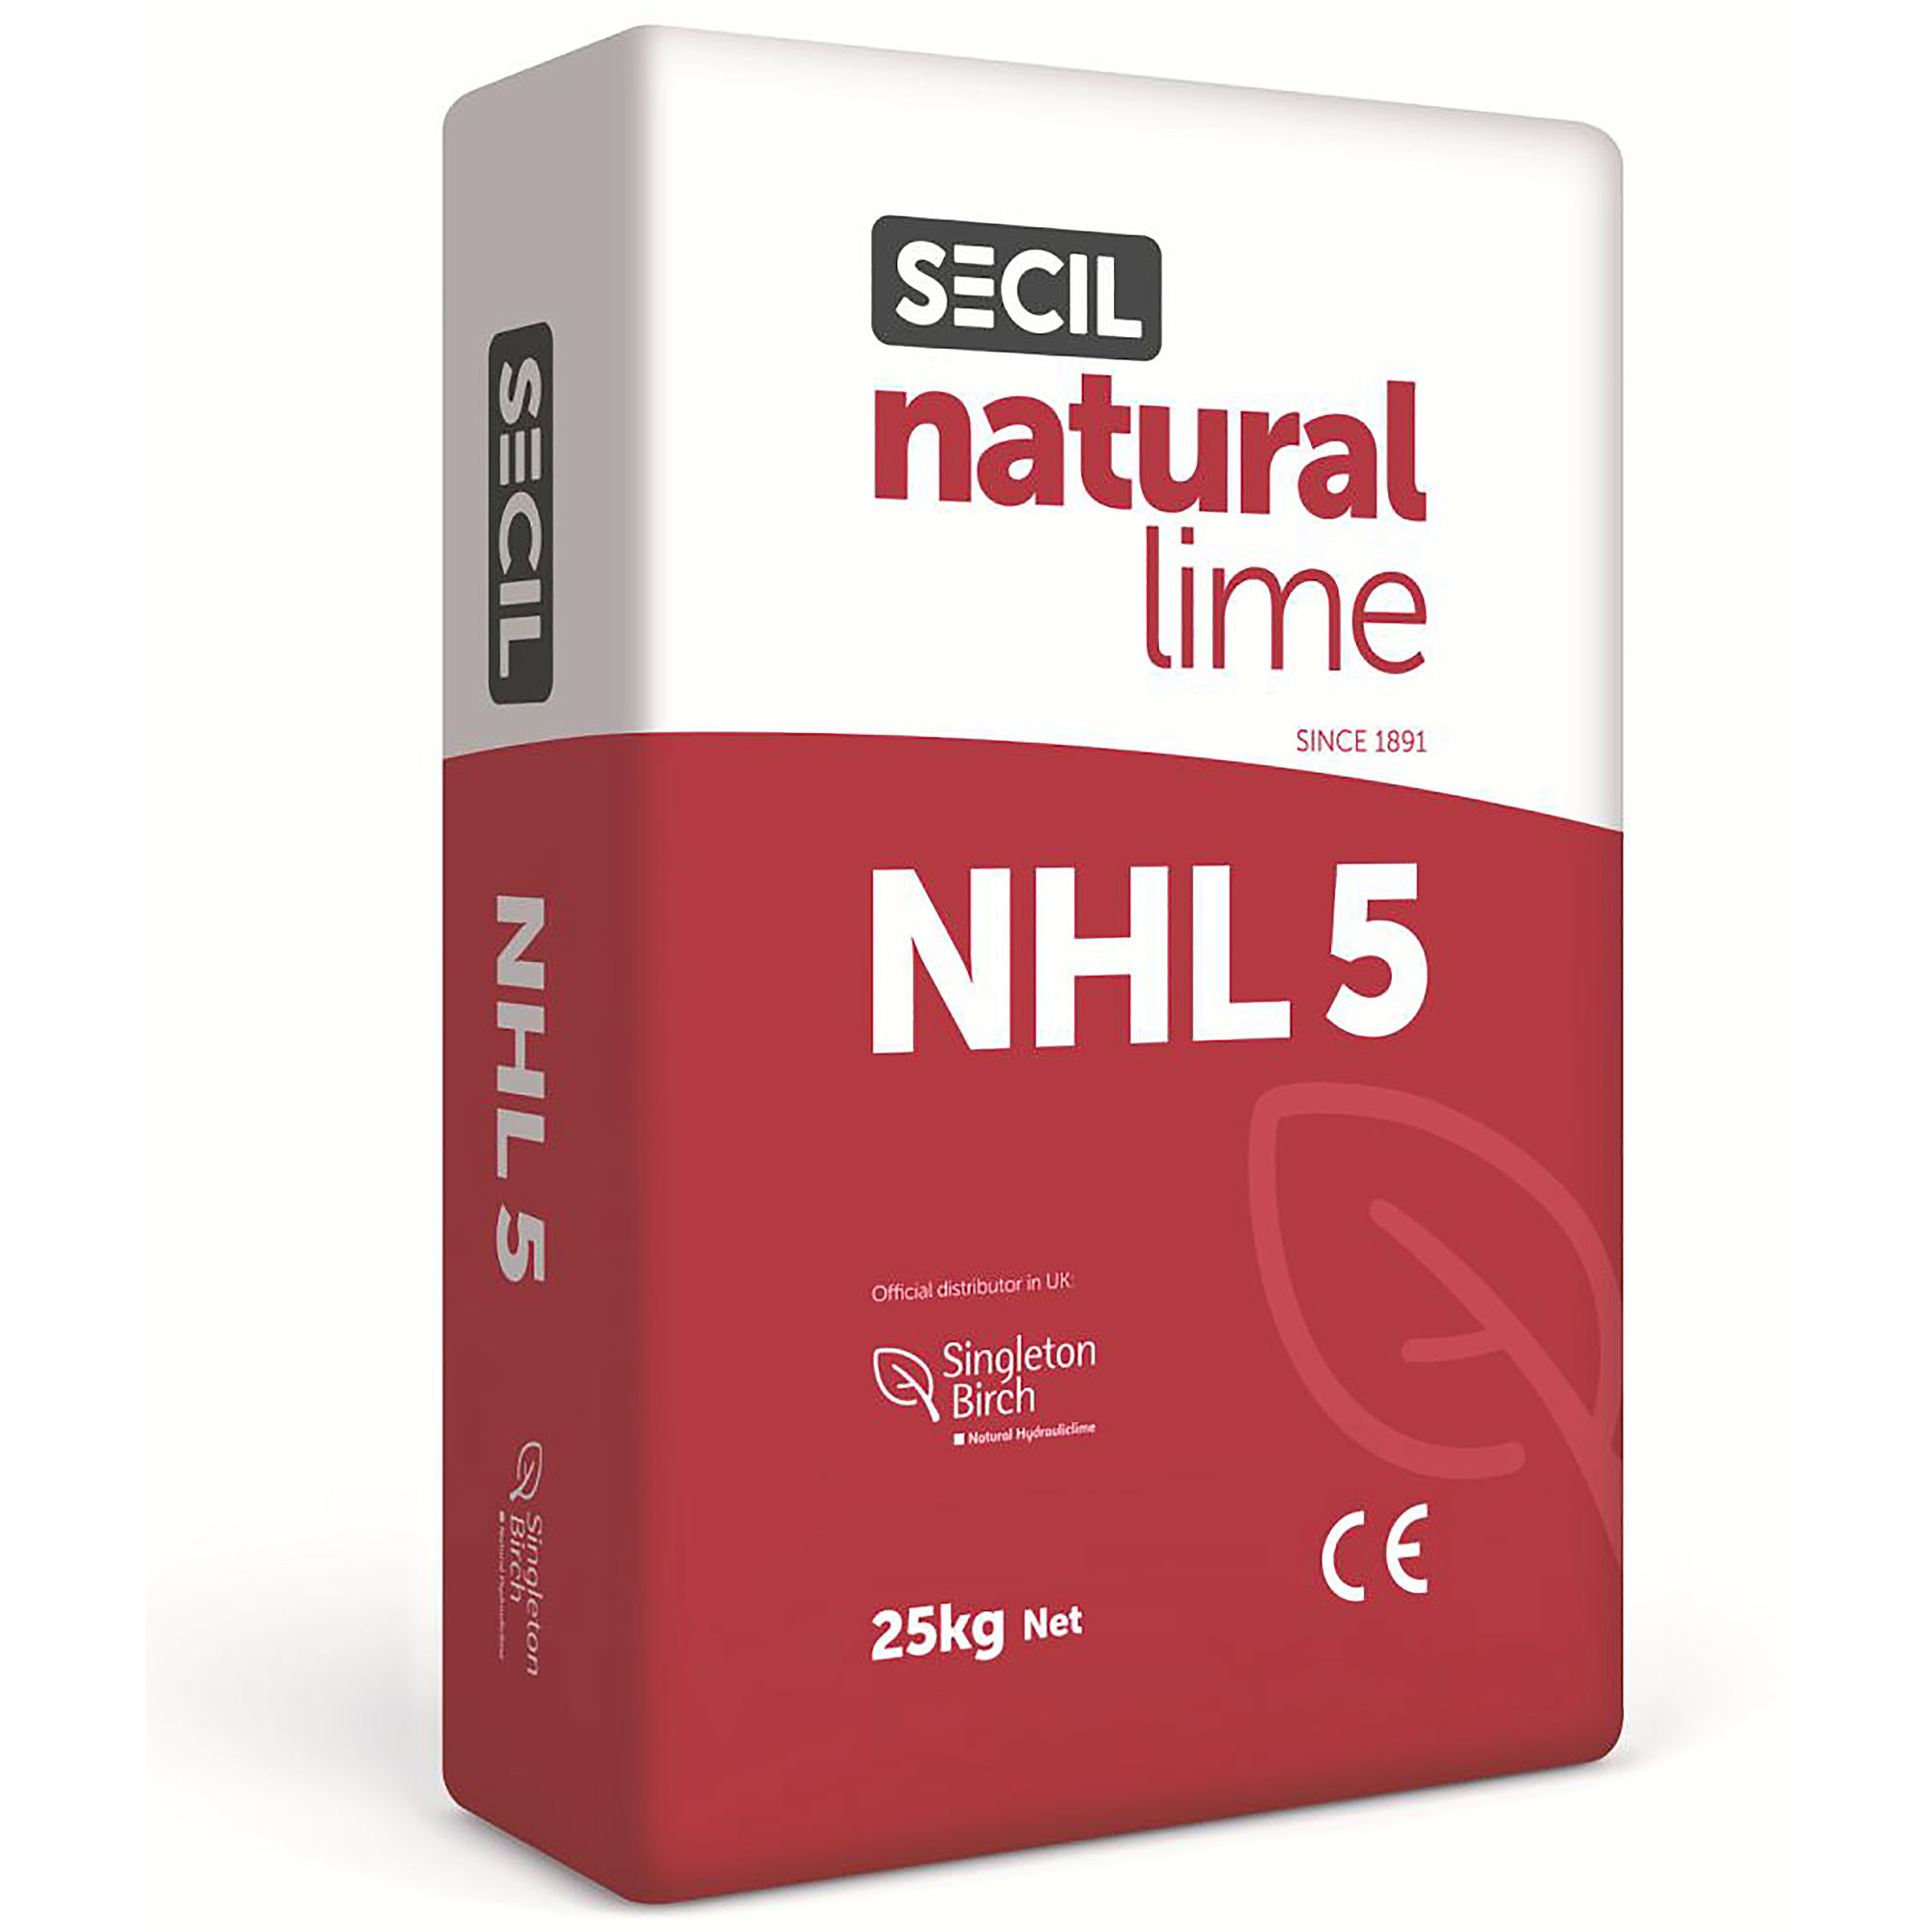 Secil Natural Hydraulic Lime NHL 5.0 25kg